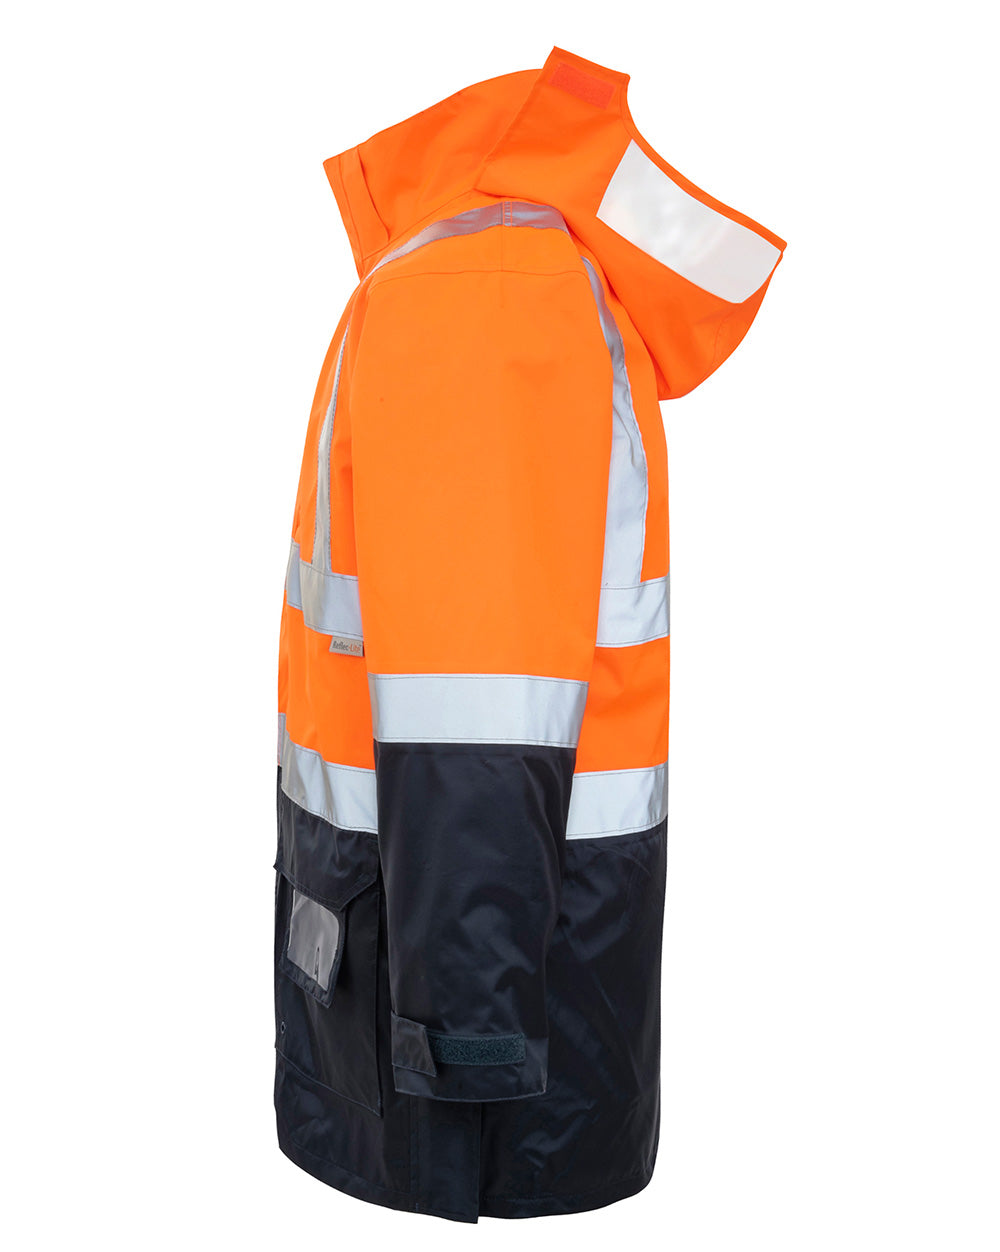 4-in-1 Utility Jacket & Vest in Fluoro Orange & Navy